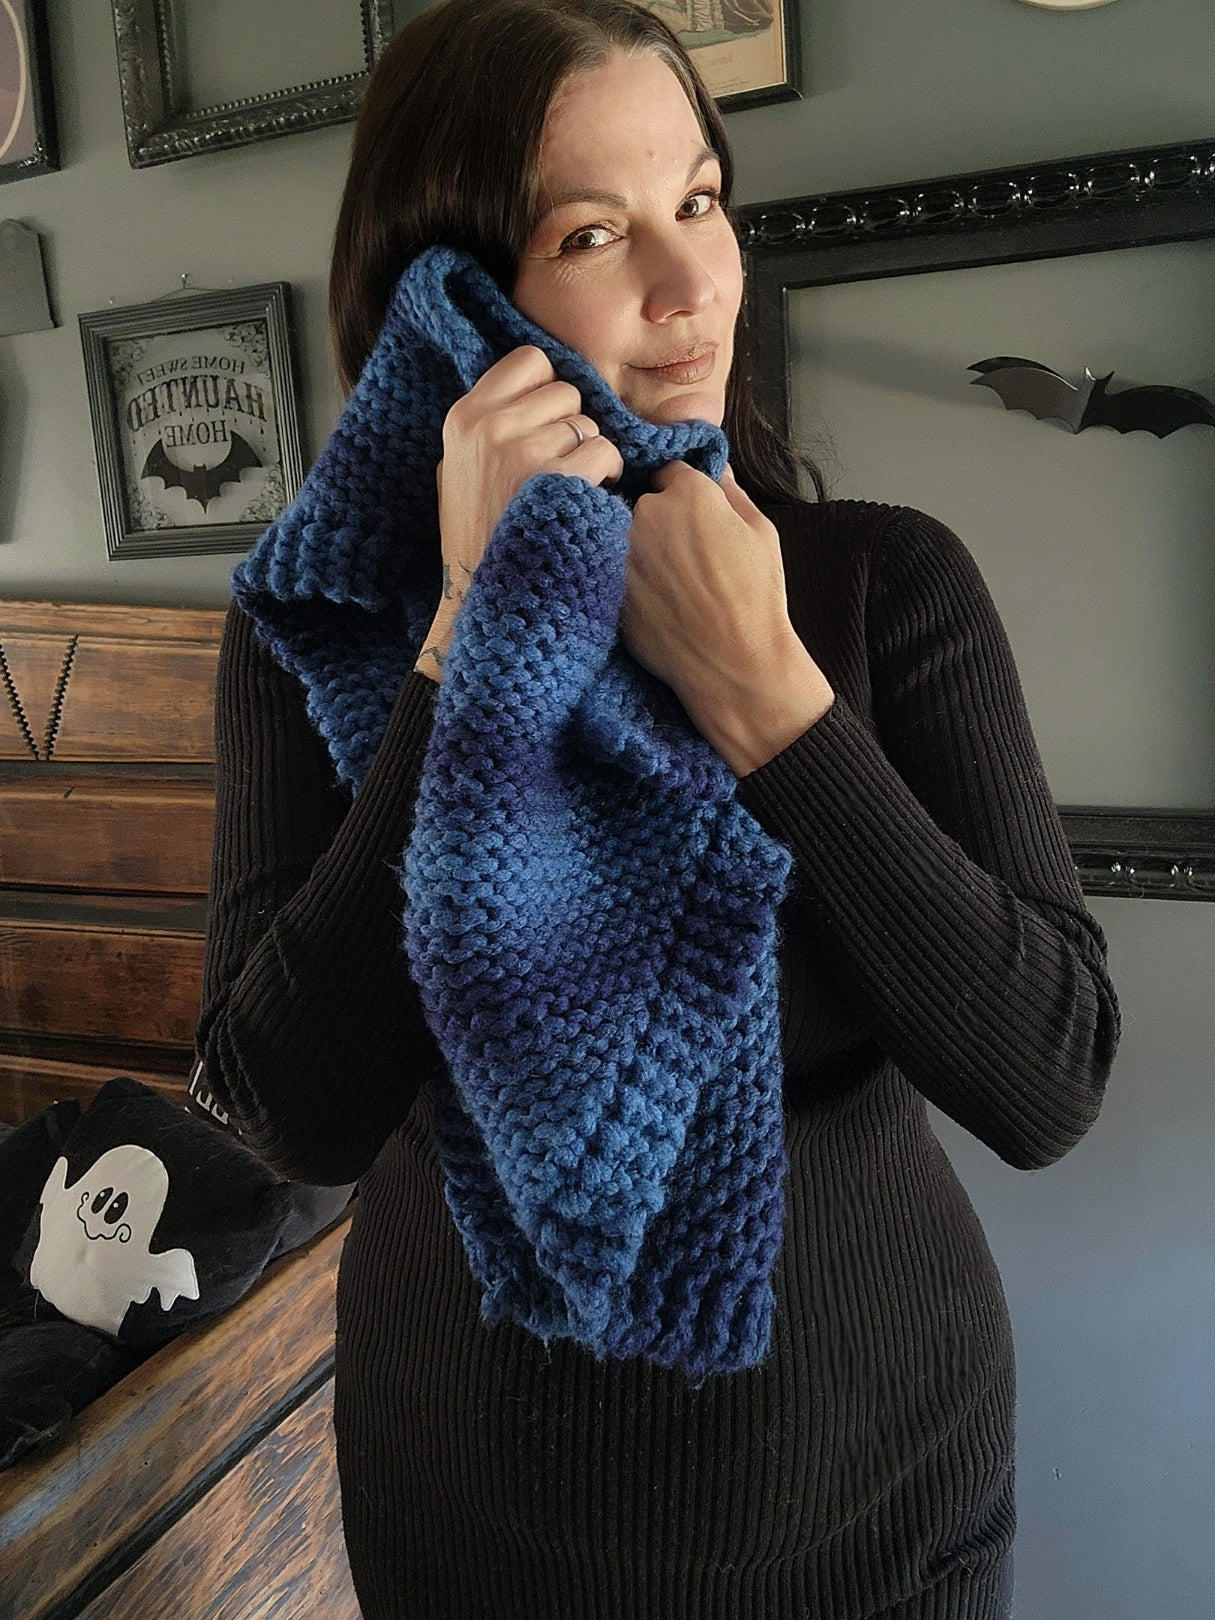 The "Woodland Mermaid" Handknit Ombre Blue Shawl